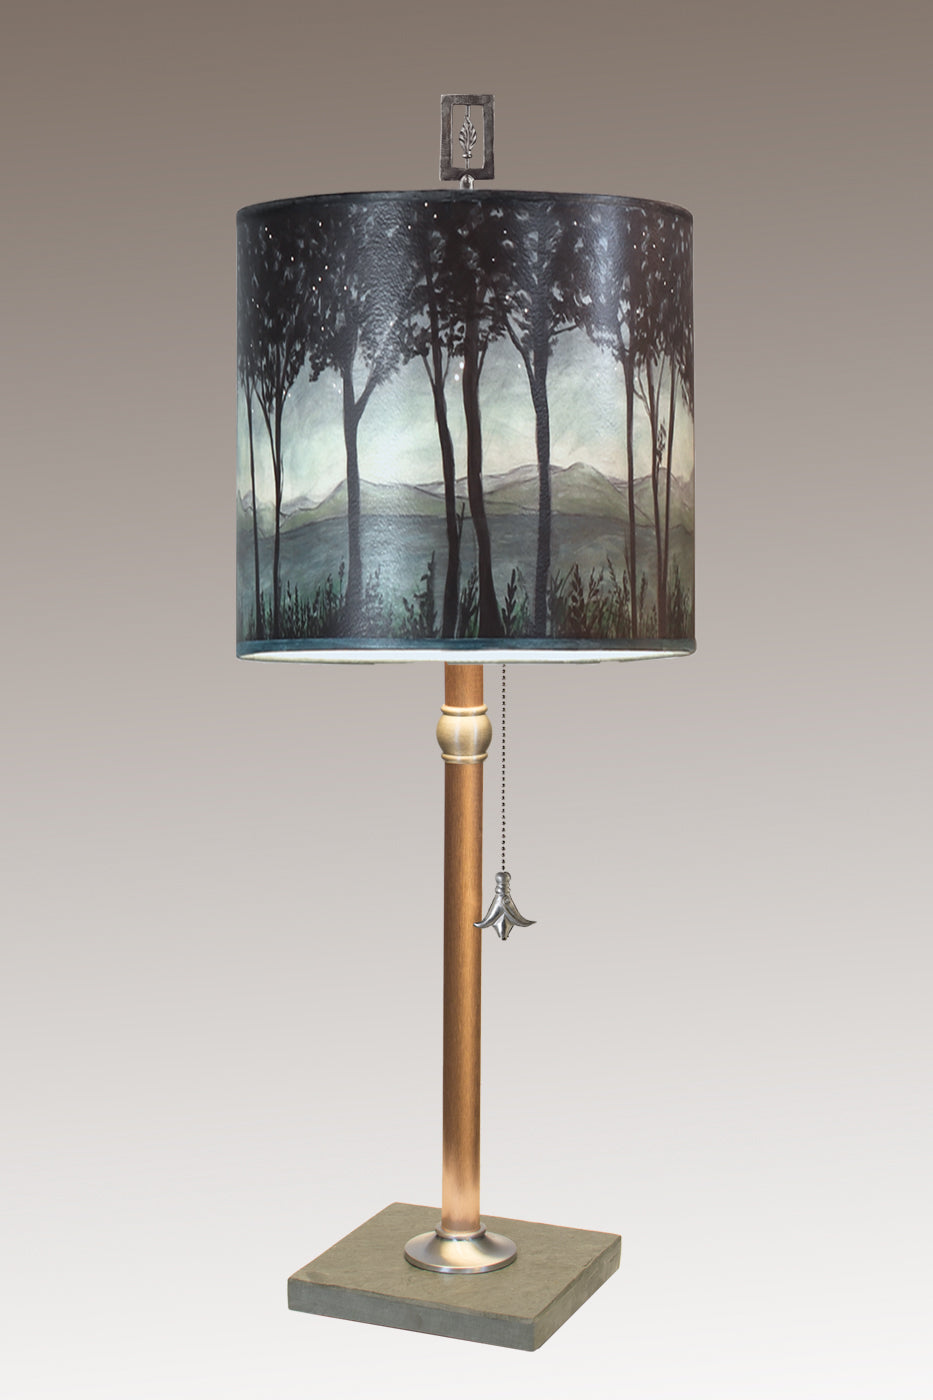 Copper Table Lamp with Medium Drum Shade in Twilight